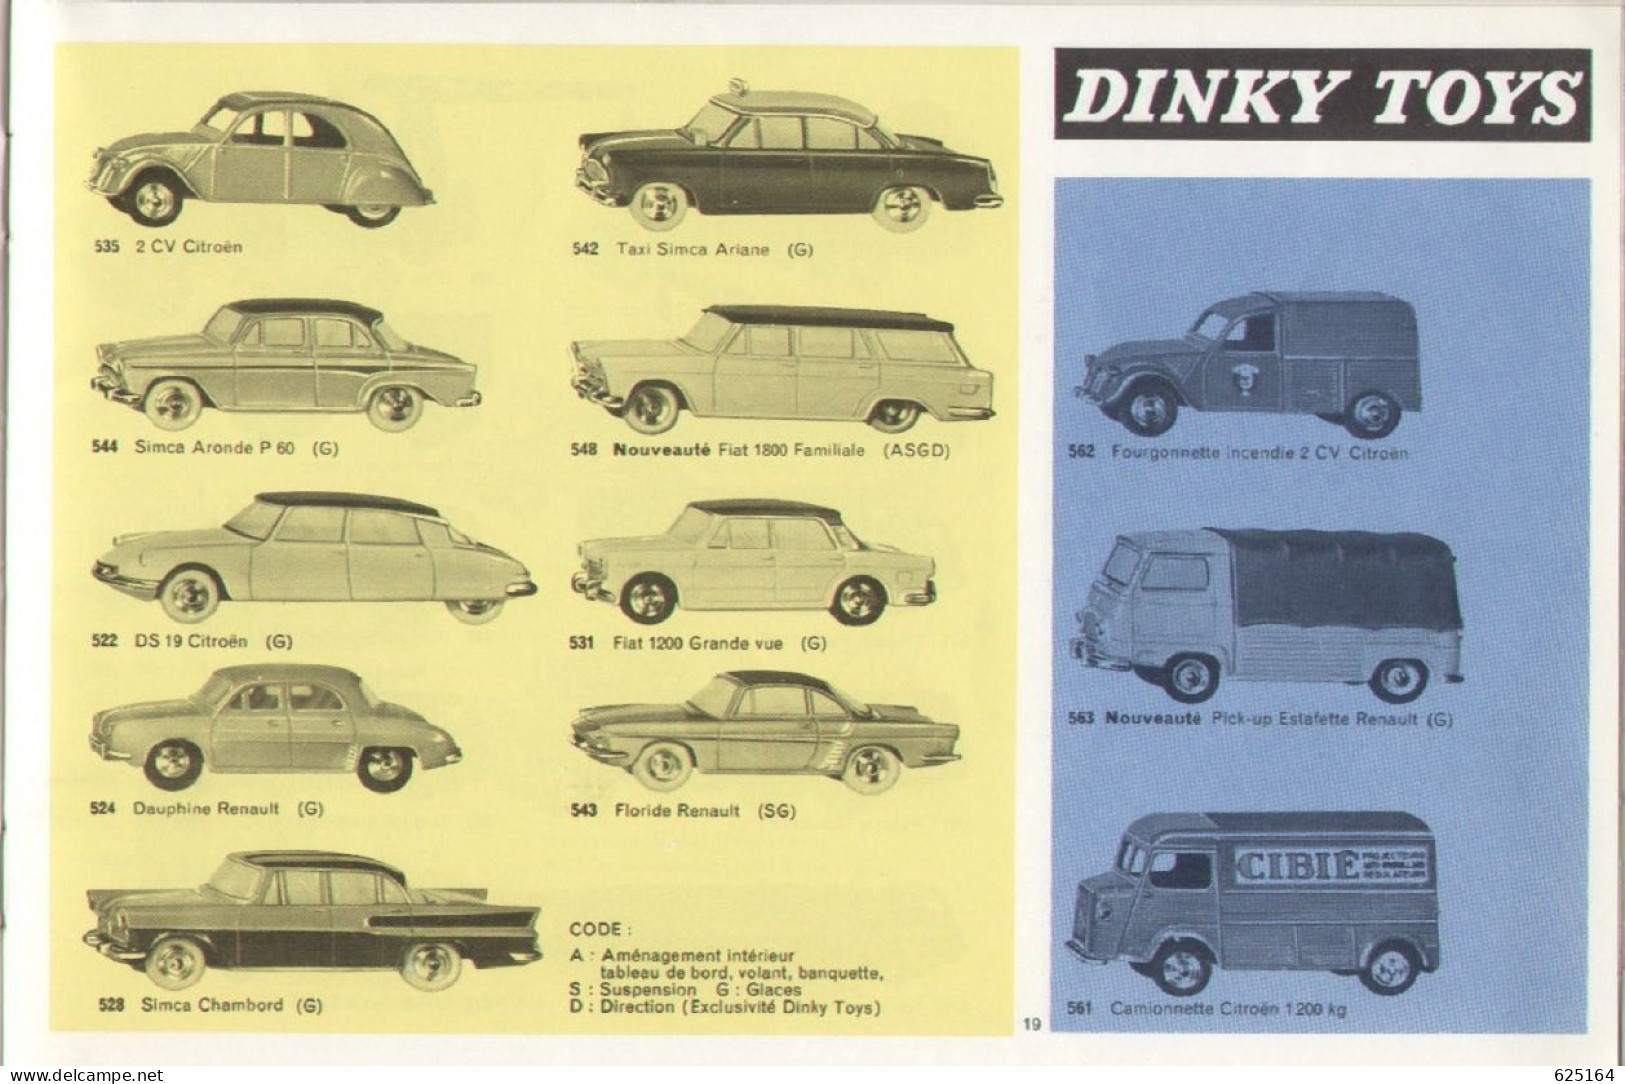 Catalogue HOrnby-acHO 1960/61 MECCANO HORNBY OO DINKY TOYS + Prix FF - Francés